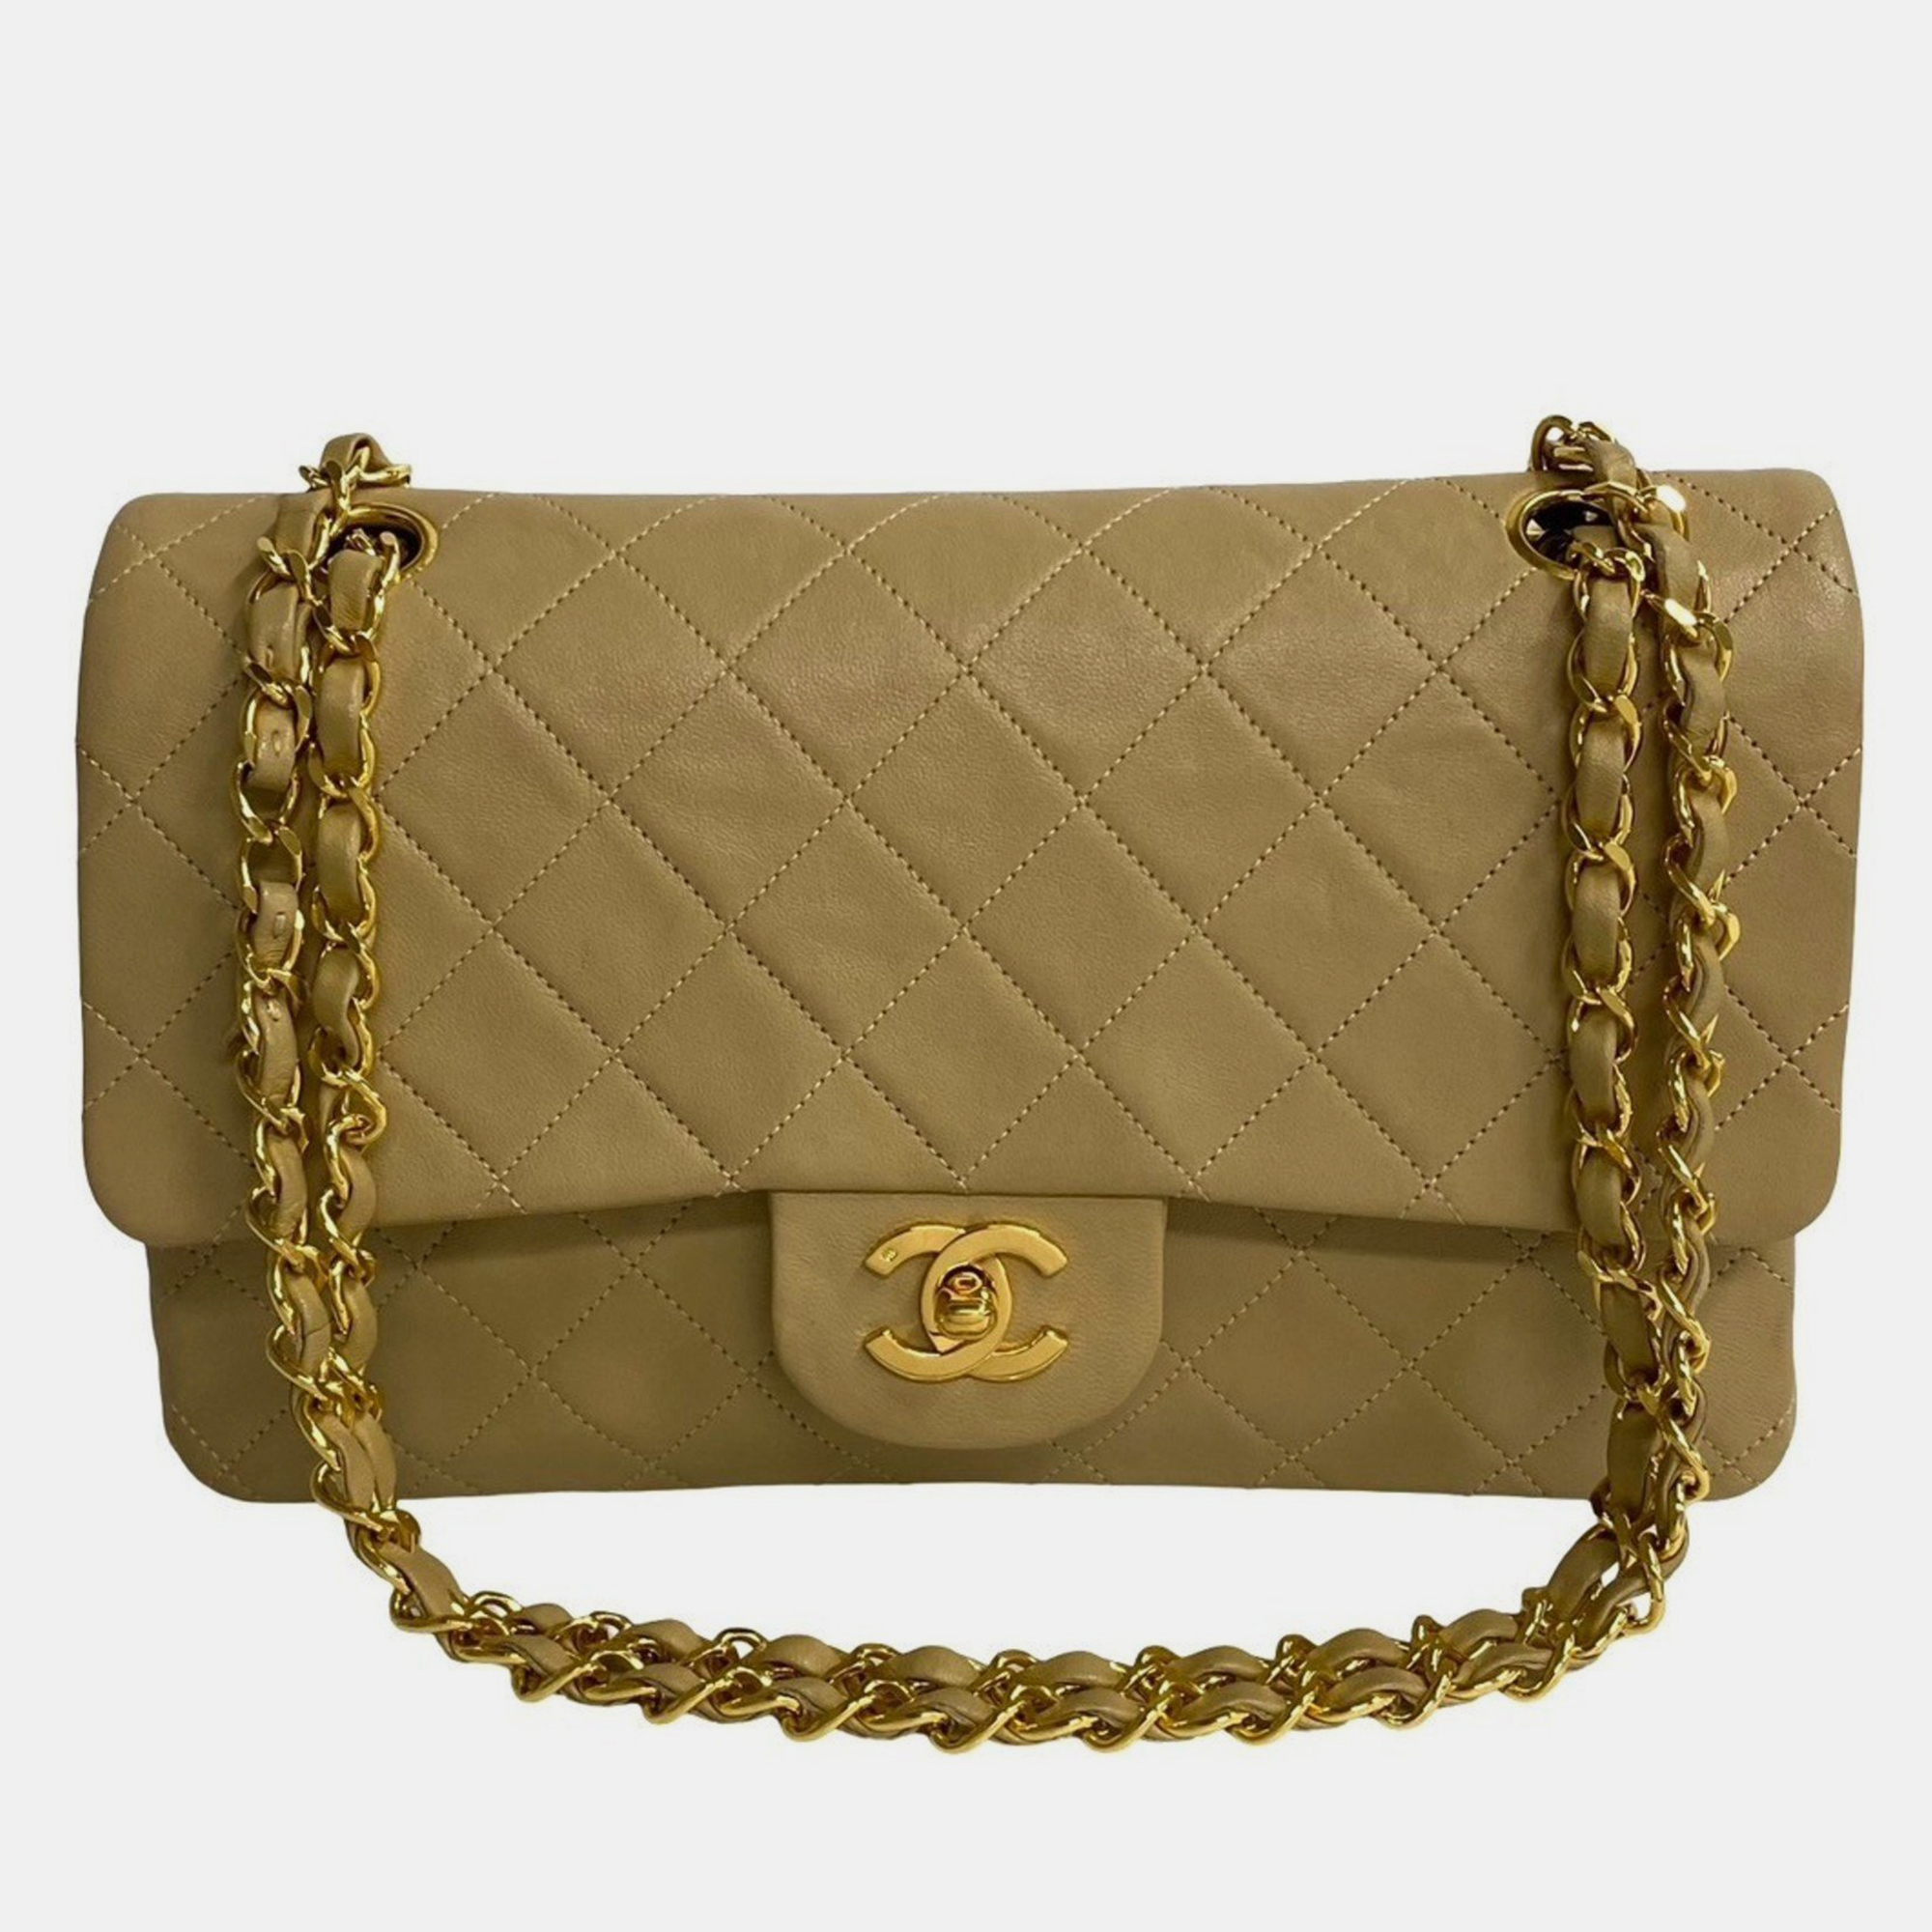 Chanel beige leather classic medium double flap bag